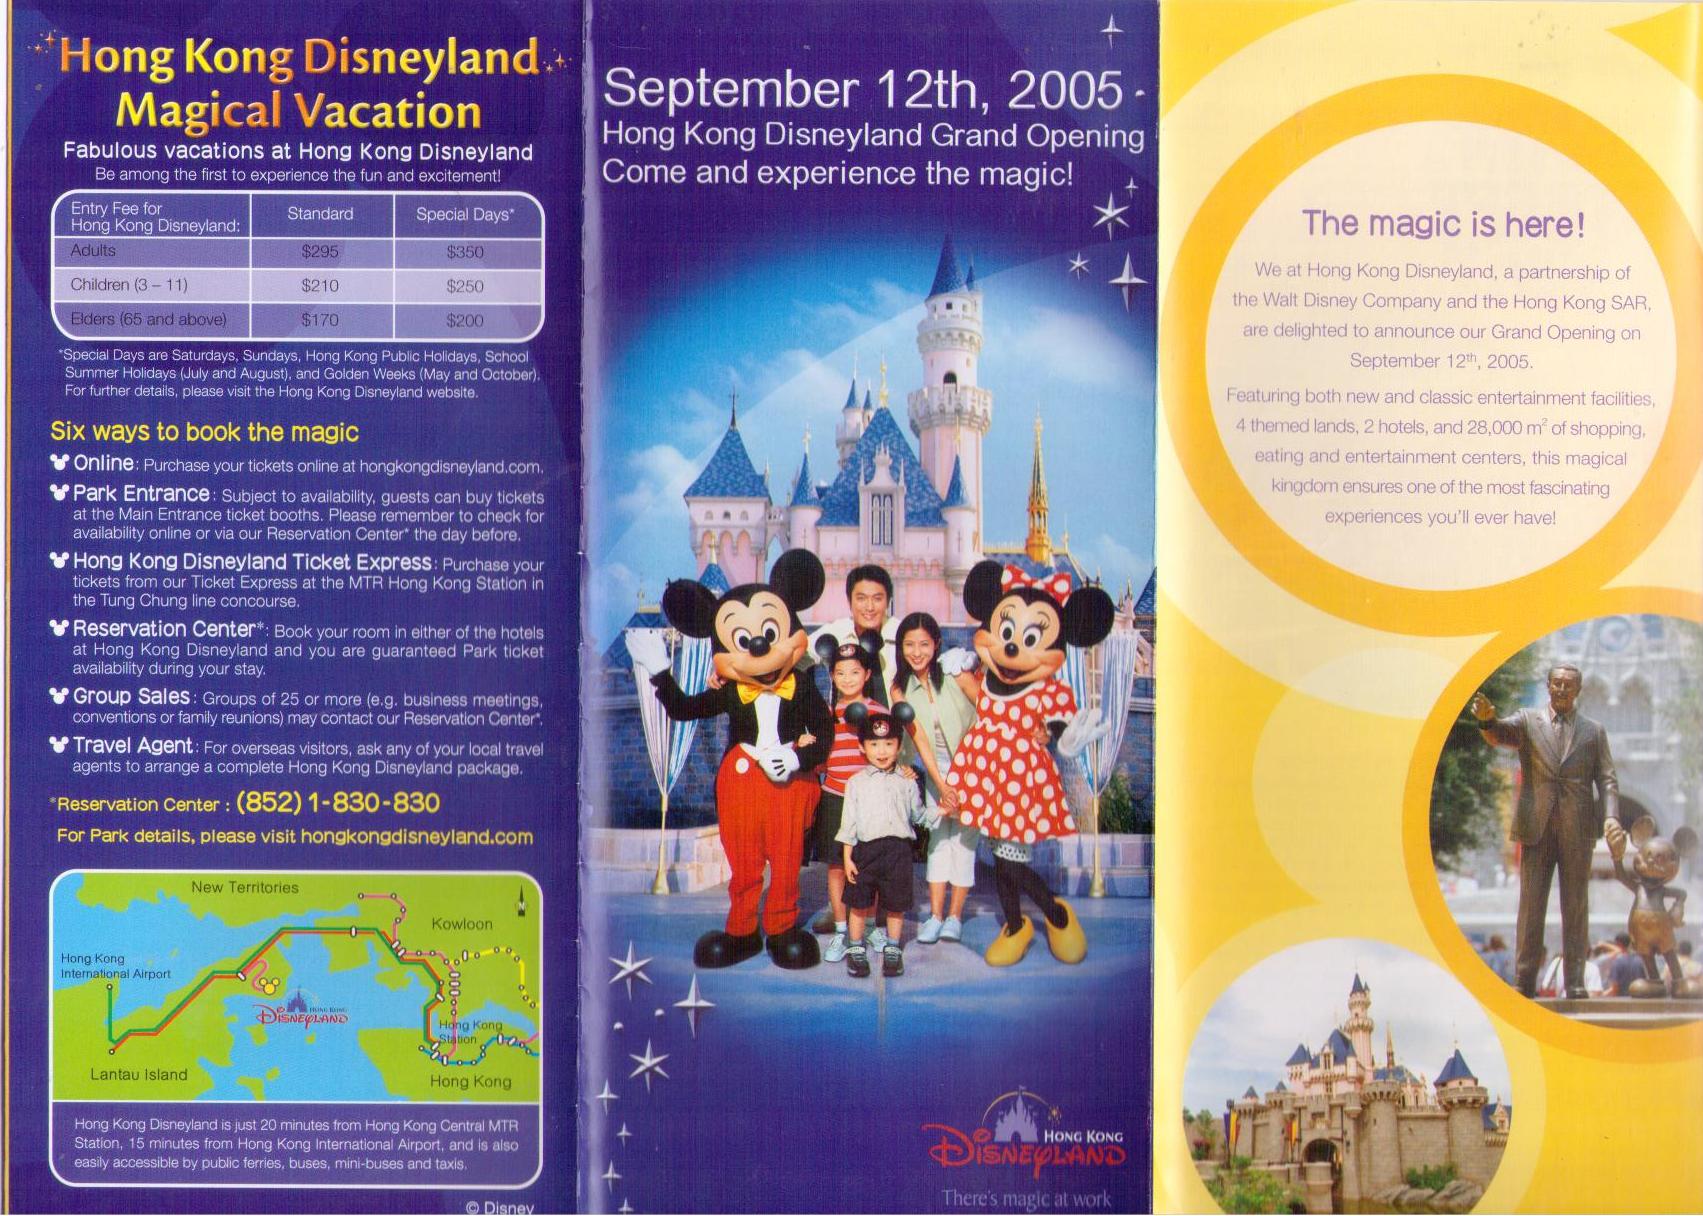 Hong Kong Disneyland Grand Opening (September 12th, 2005)